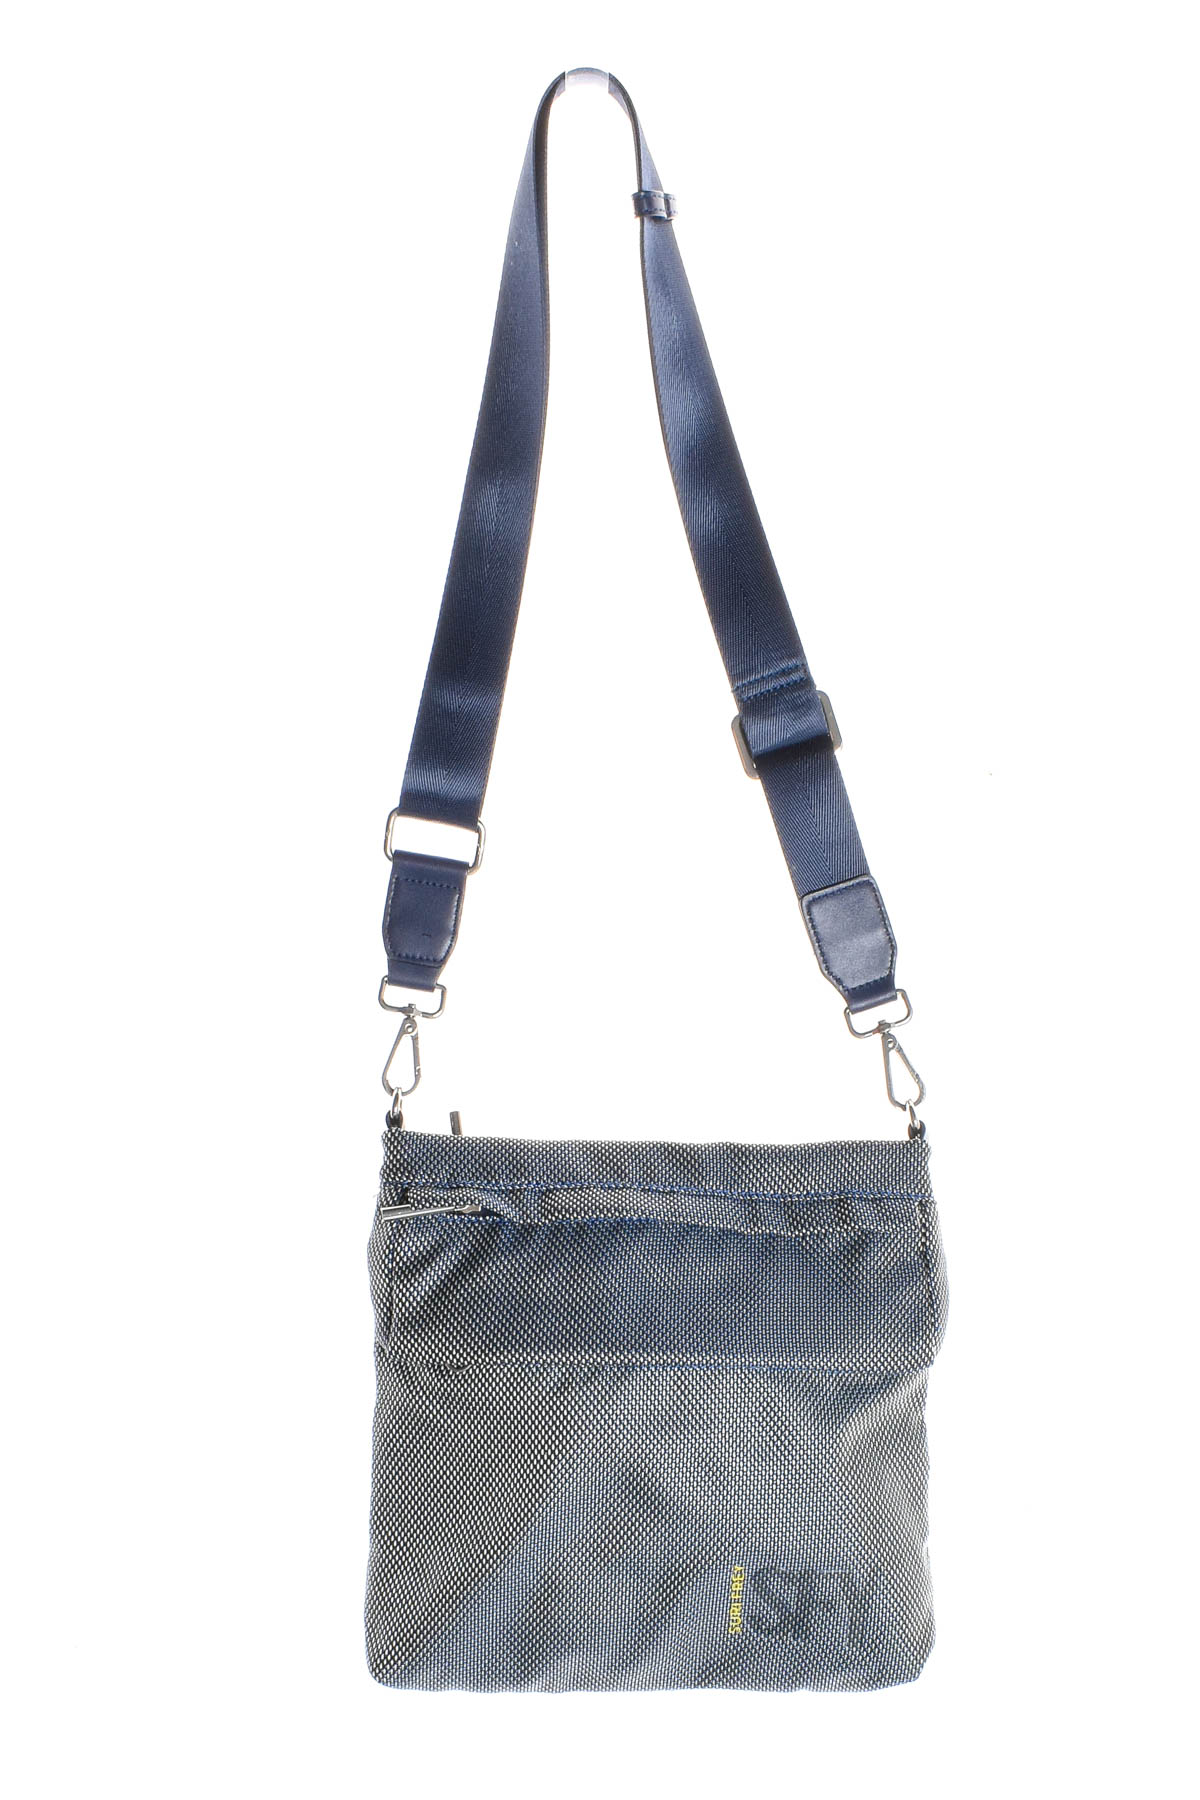 Women's bag - SURI FREY - 0